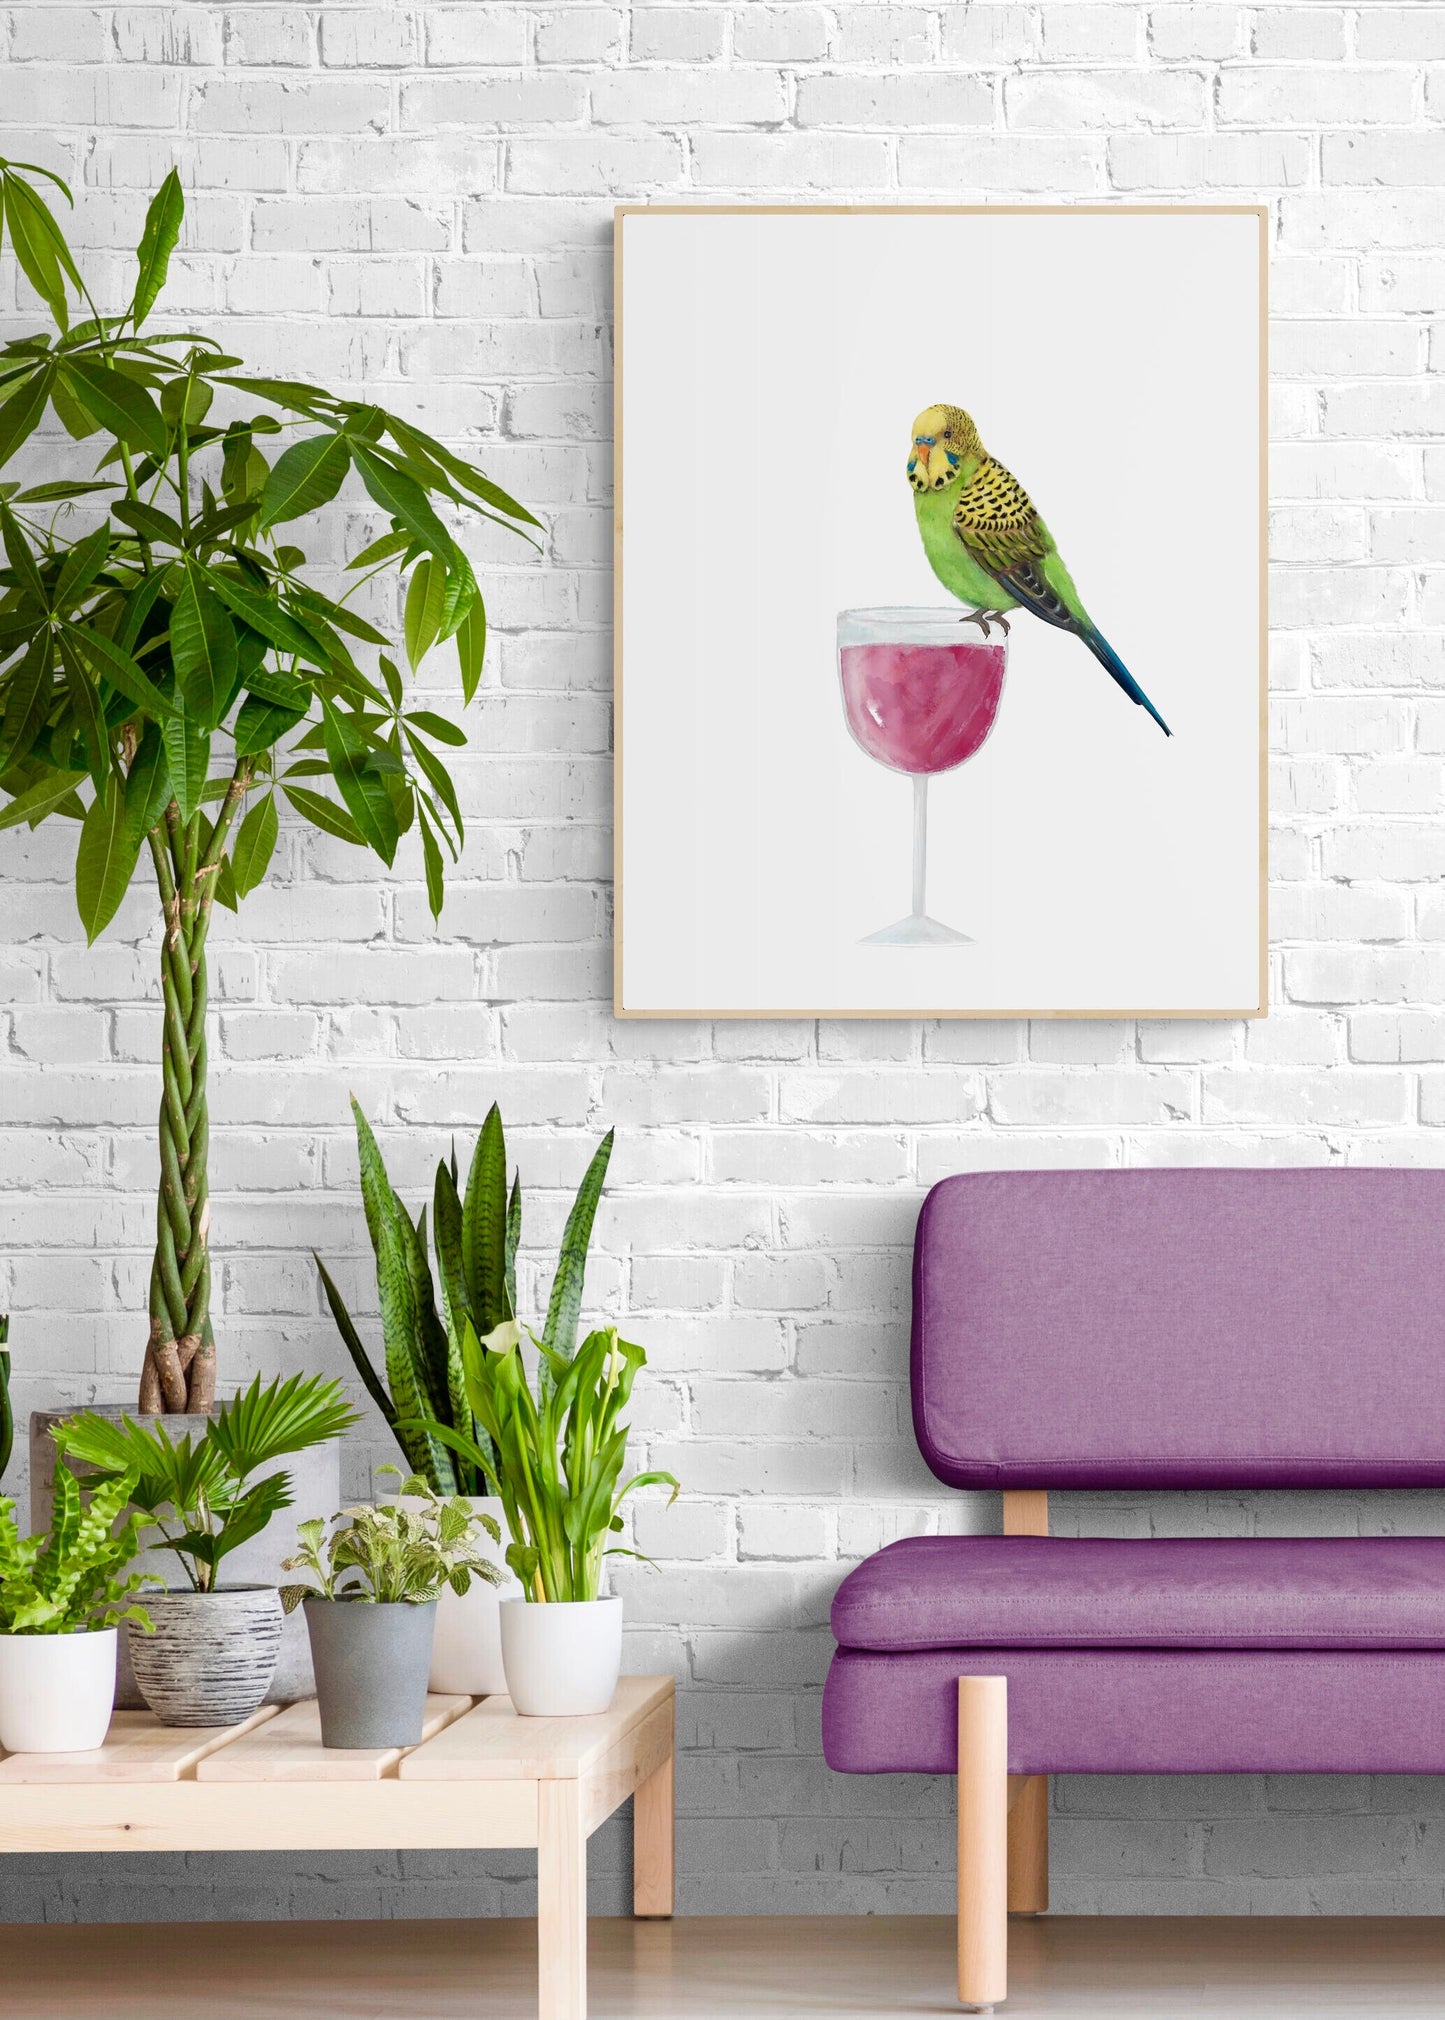 Green Parakeet On Wine Glass